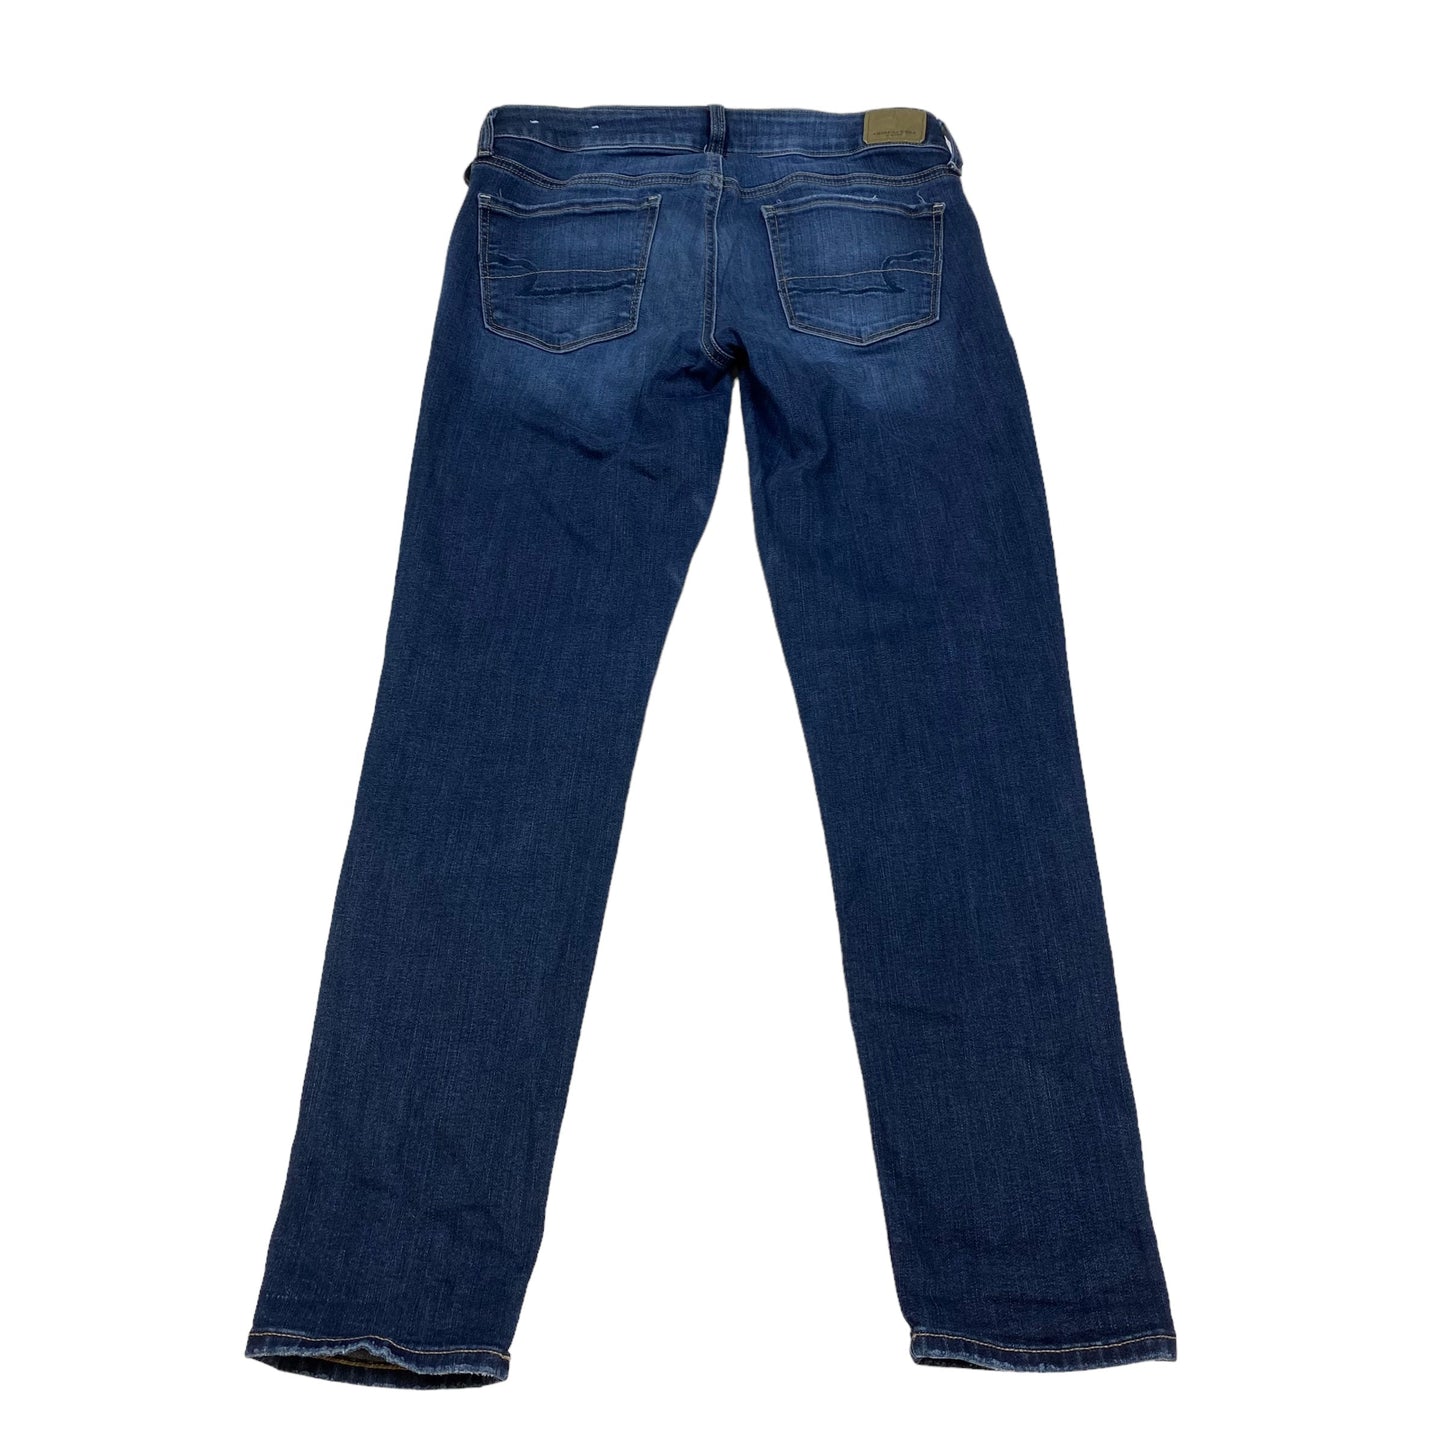 Blue Denim Jeans Skinny American Eagle, Size 8